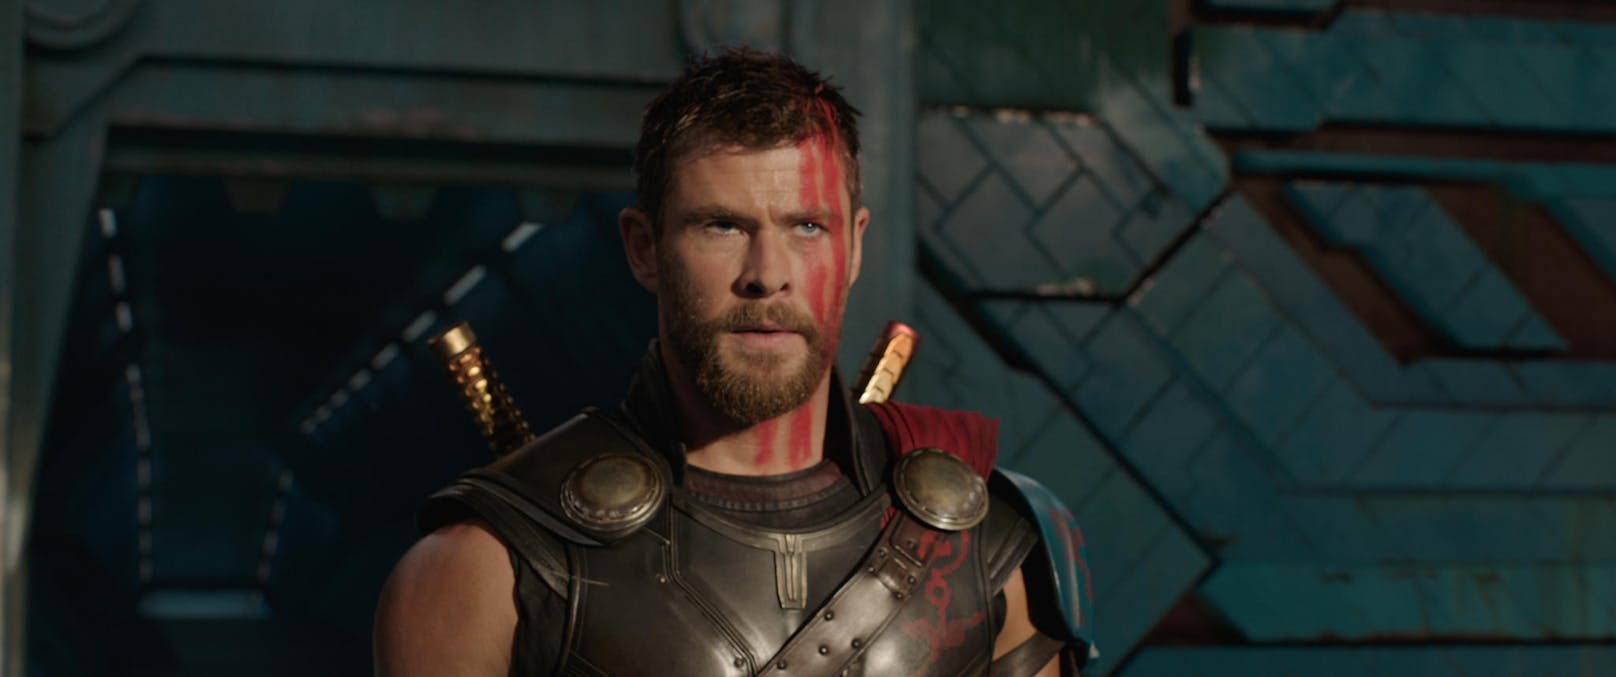 Chris Hemsworth in "Thor: Ragnarok"